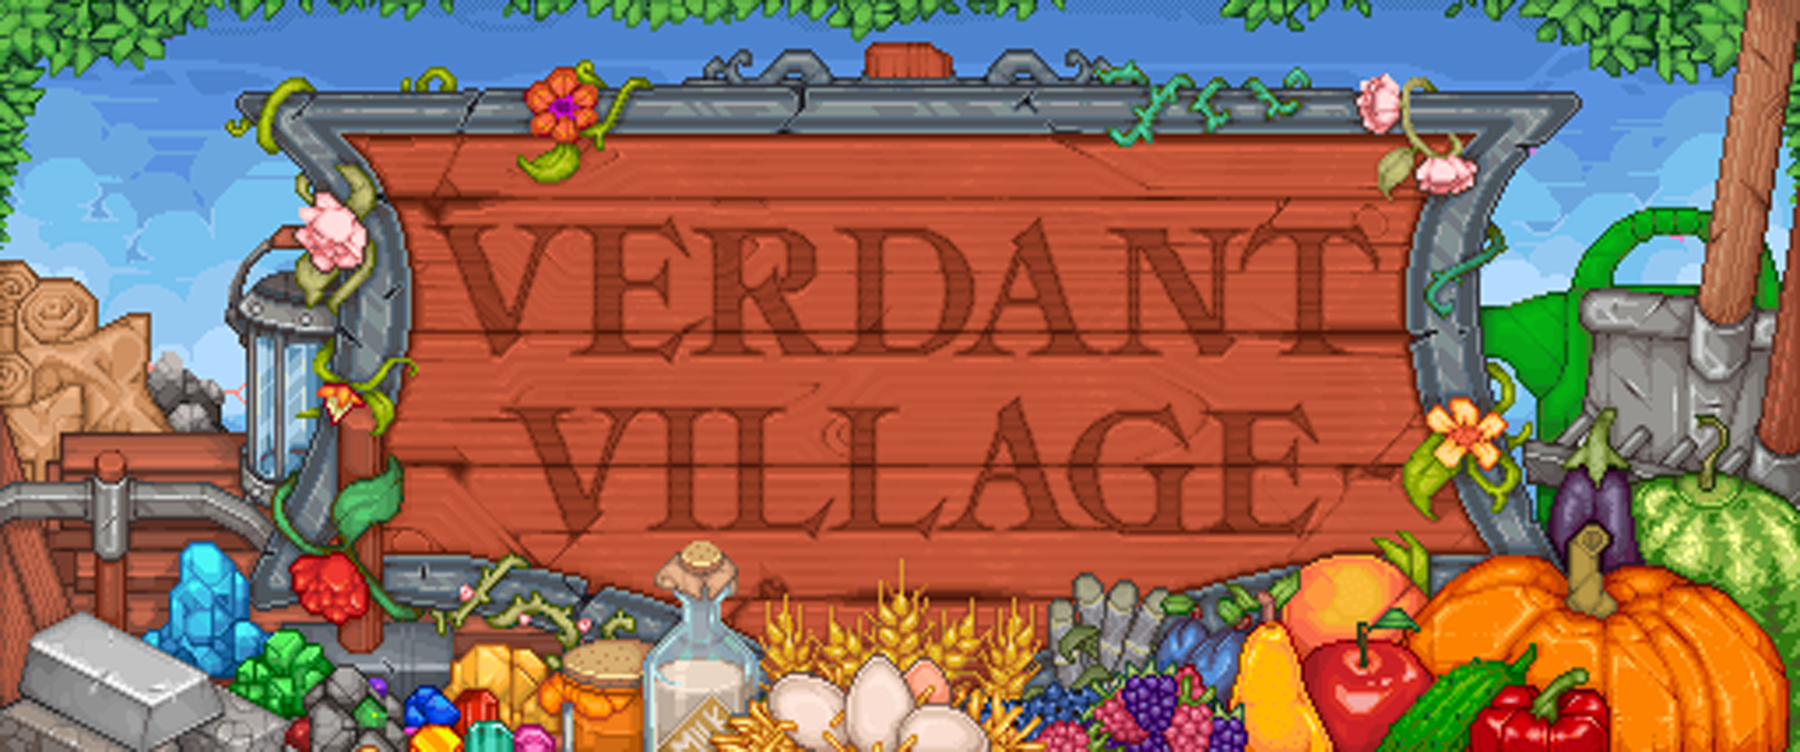   Verdant Village -      GAMMAGAMES.RU